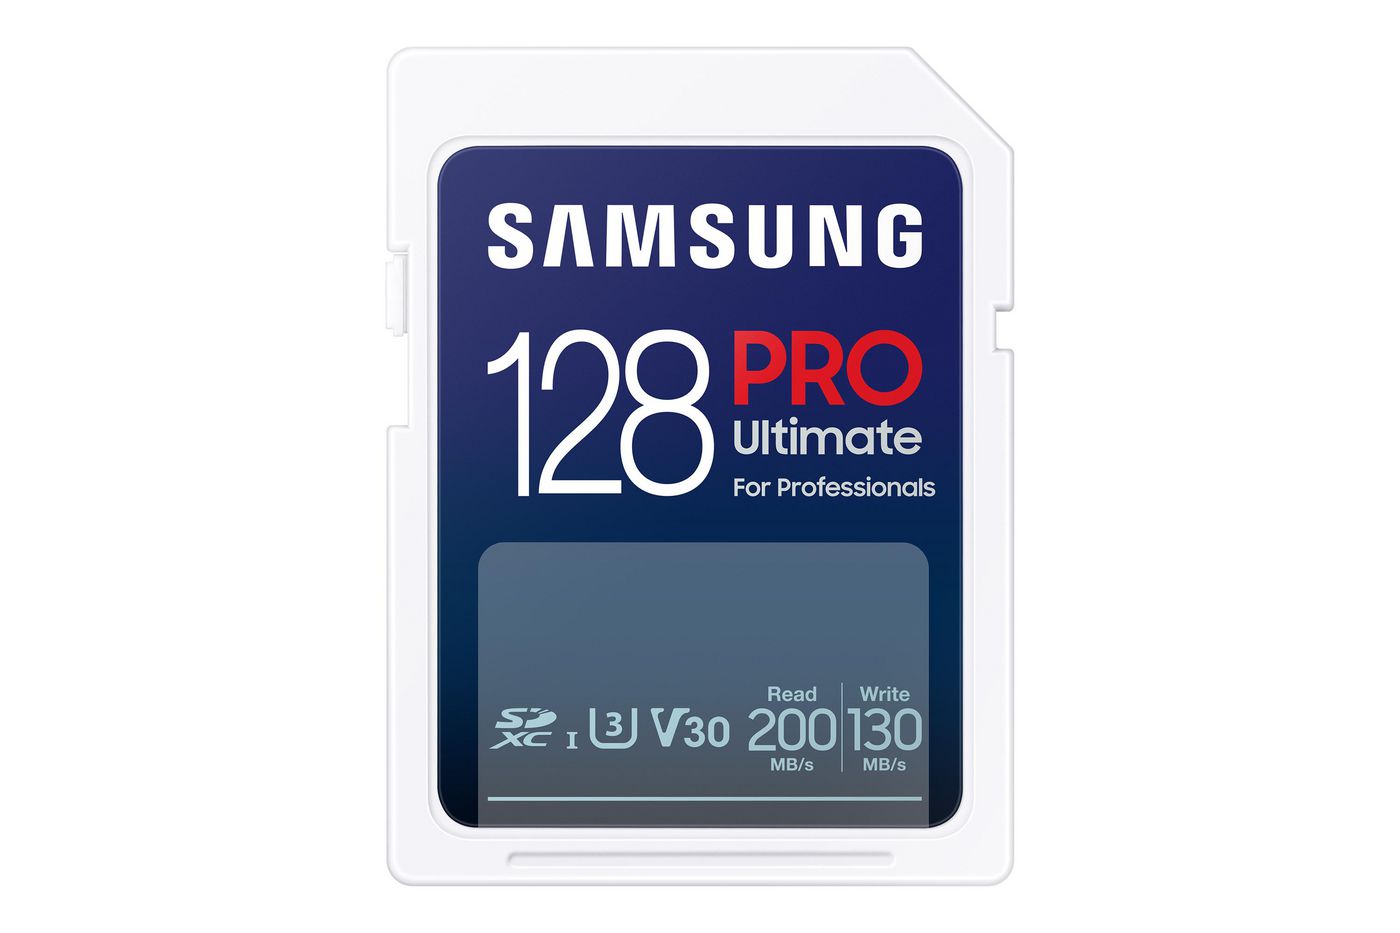 SAMSUNG SD PRO Ultimate 128GB